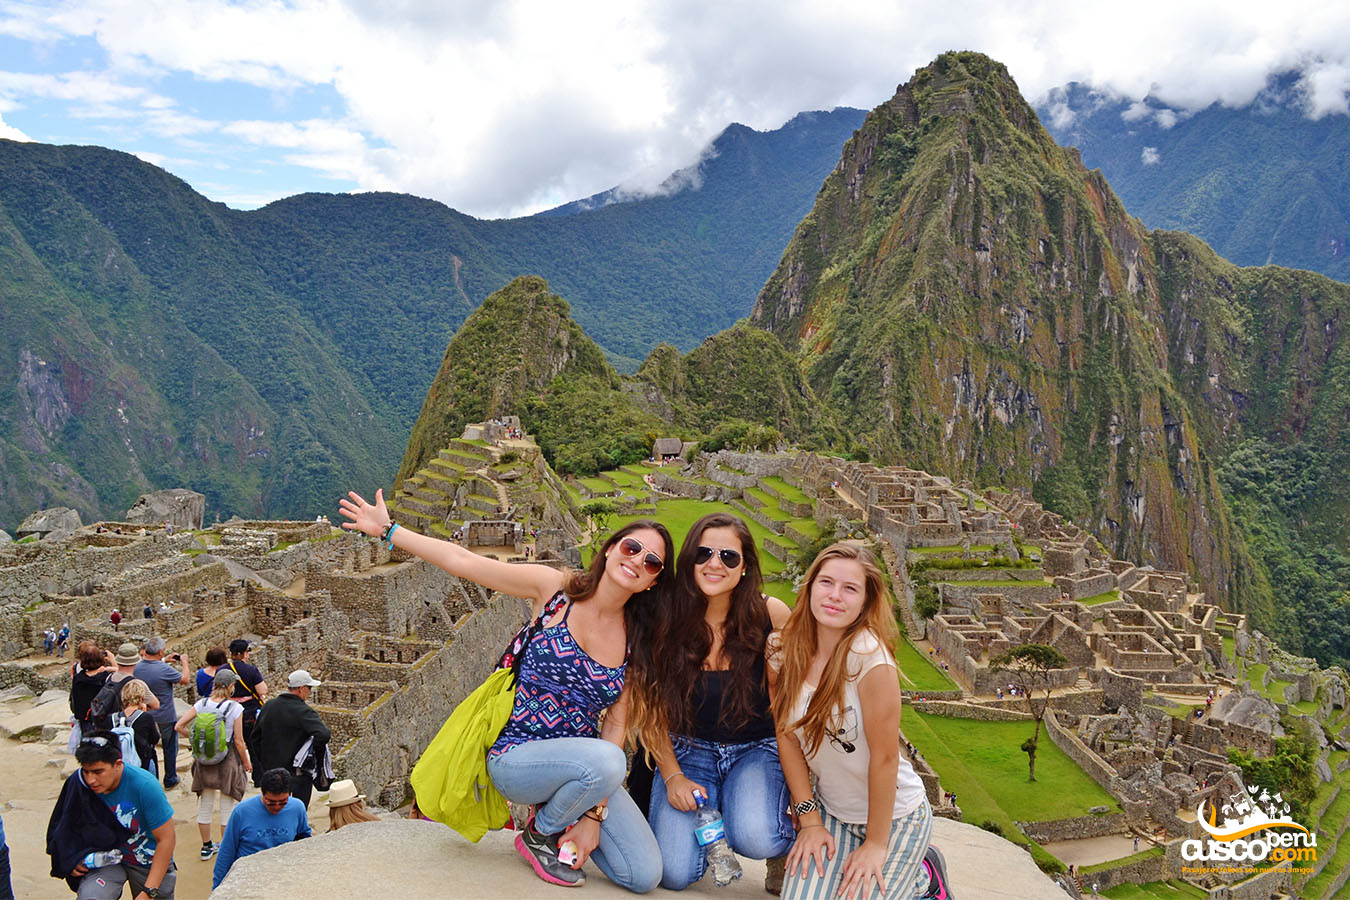 Estudiantes en la ciudadela inca de Machu Picchu. Fuente: CuscoPeru.com